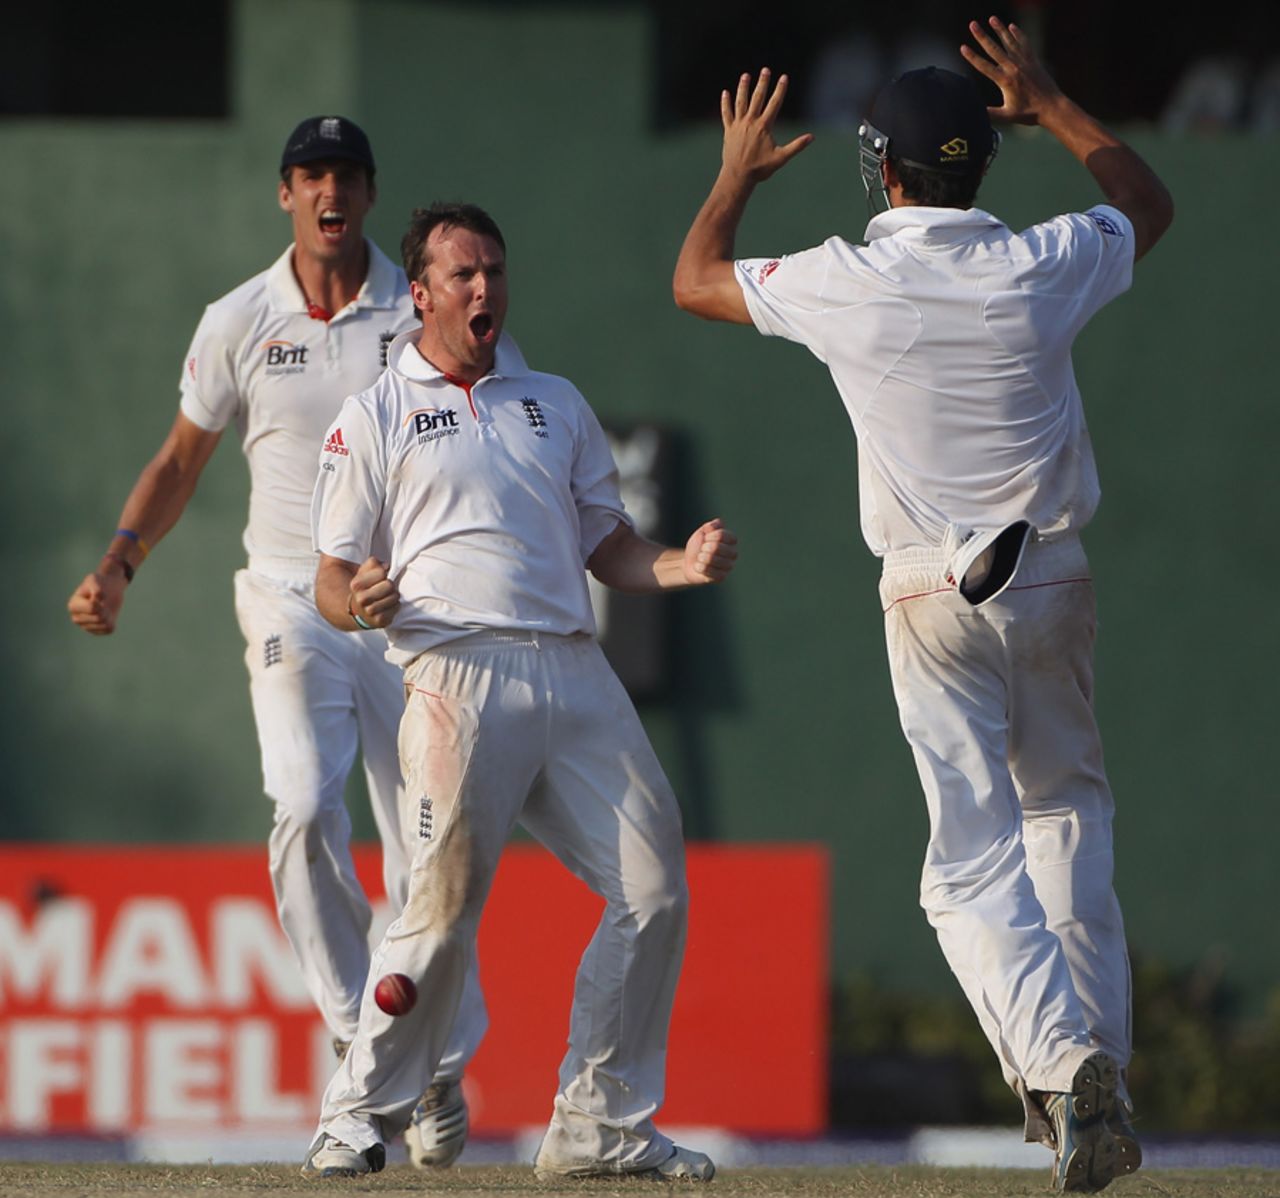 Graeme Swann celebrates the wicket of Thilan Samaraweera, Sri Lanka v England, 2nd Test, Colombo, P Sara Oval, 4th day, April 6, 2012